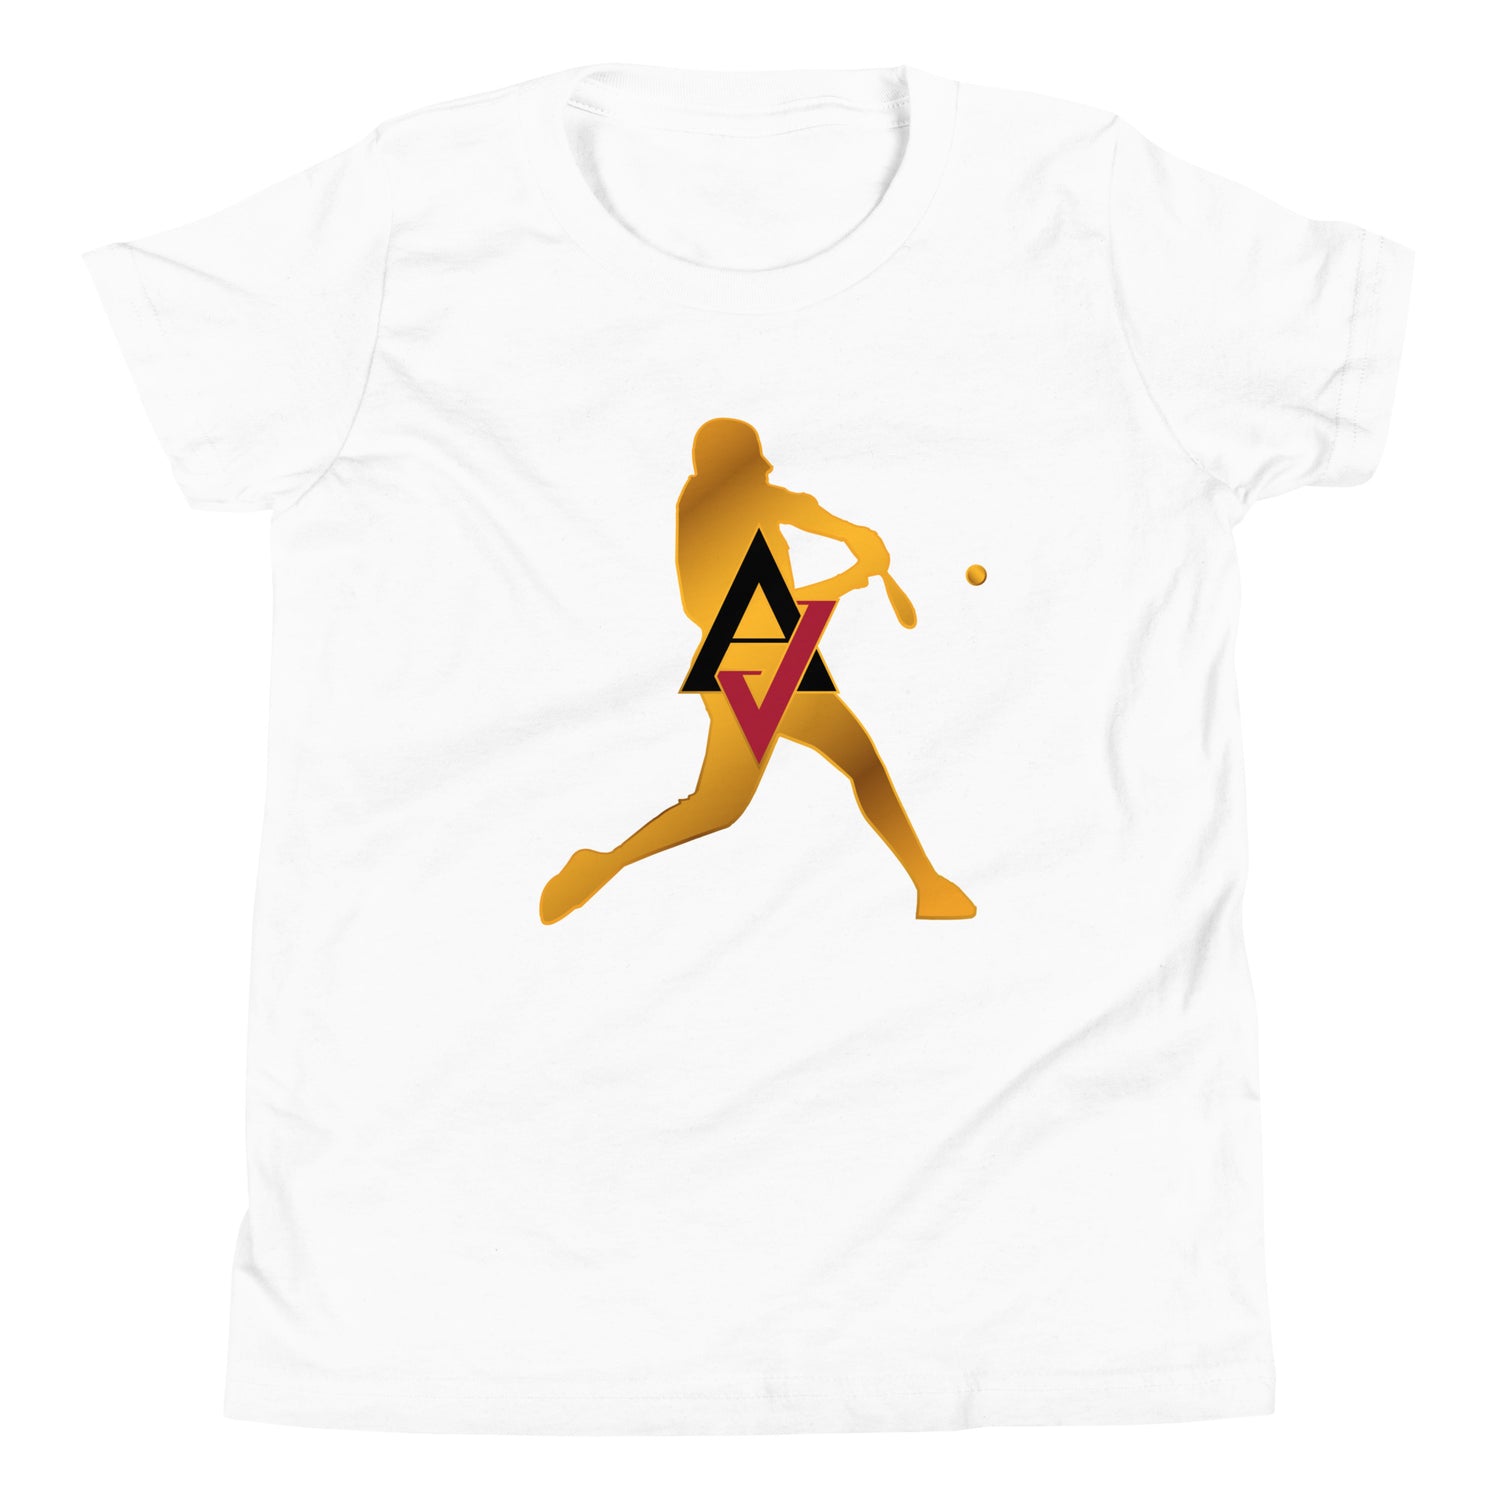 AJ Vukovich "Classic" Youth T-Shirt - Fan Arch